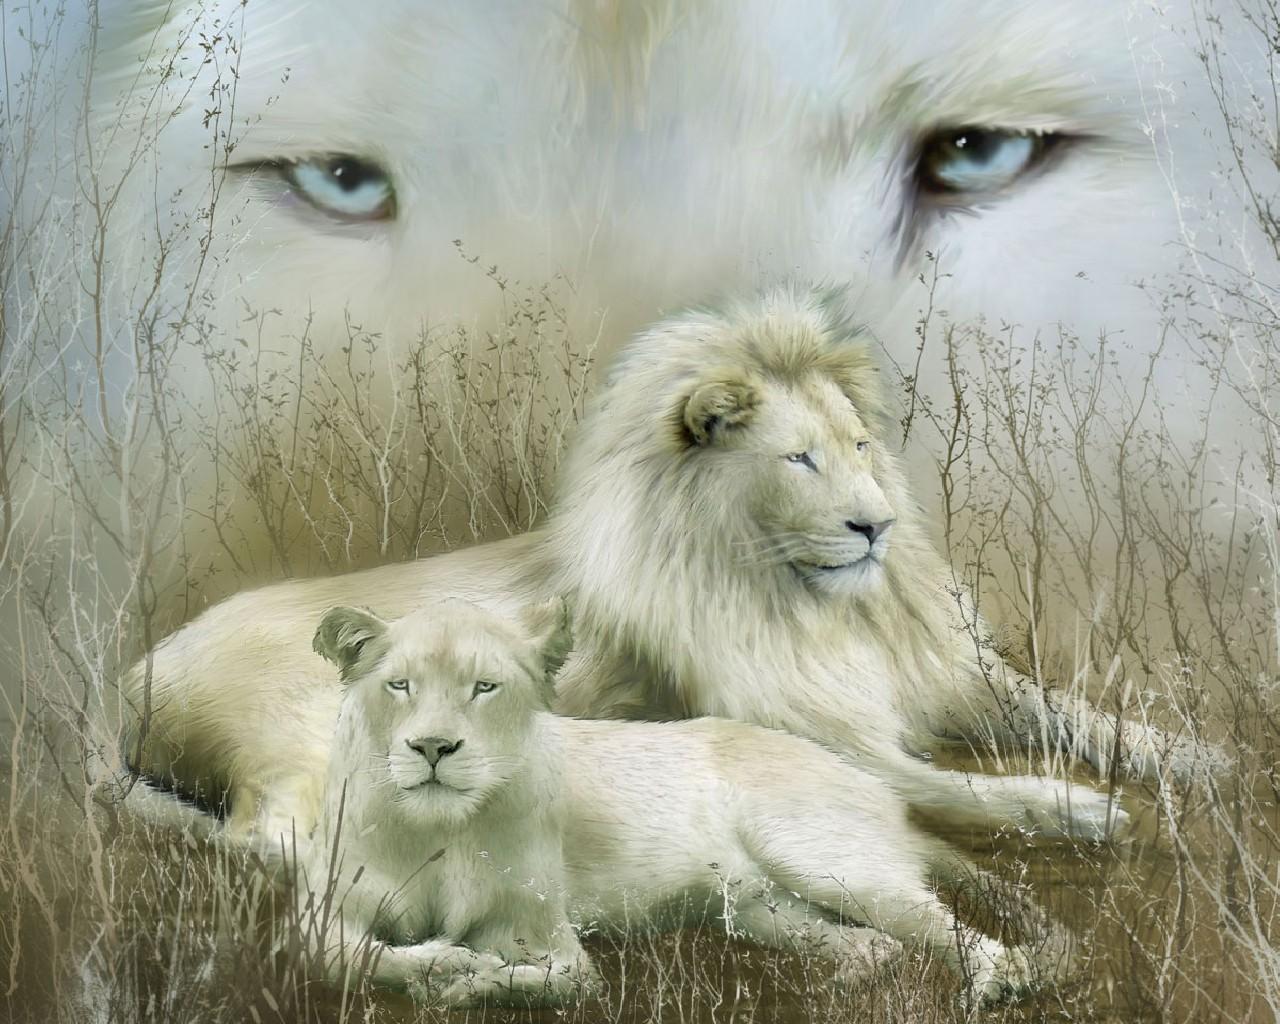 White Lions Image Wallpaper Photos